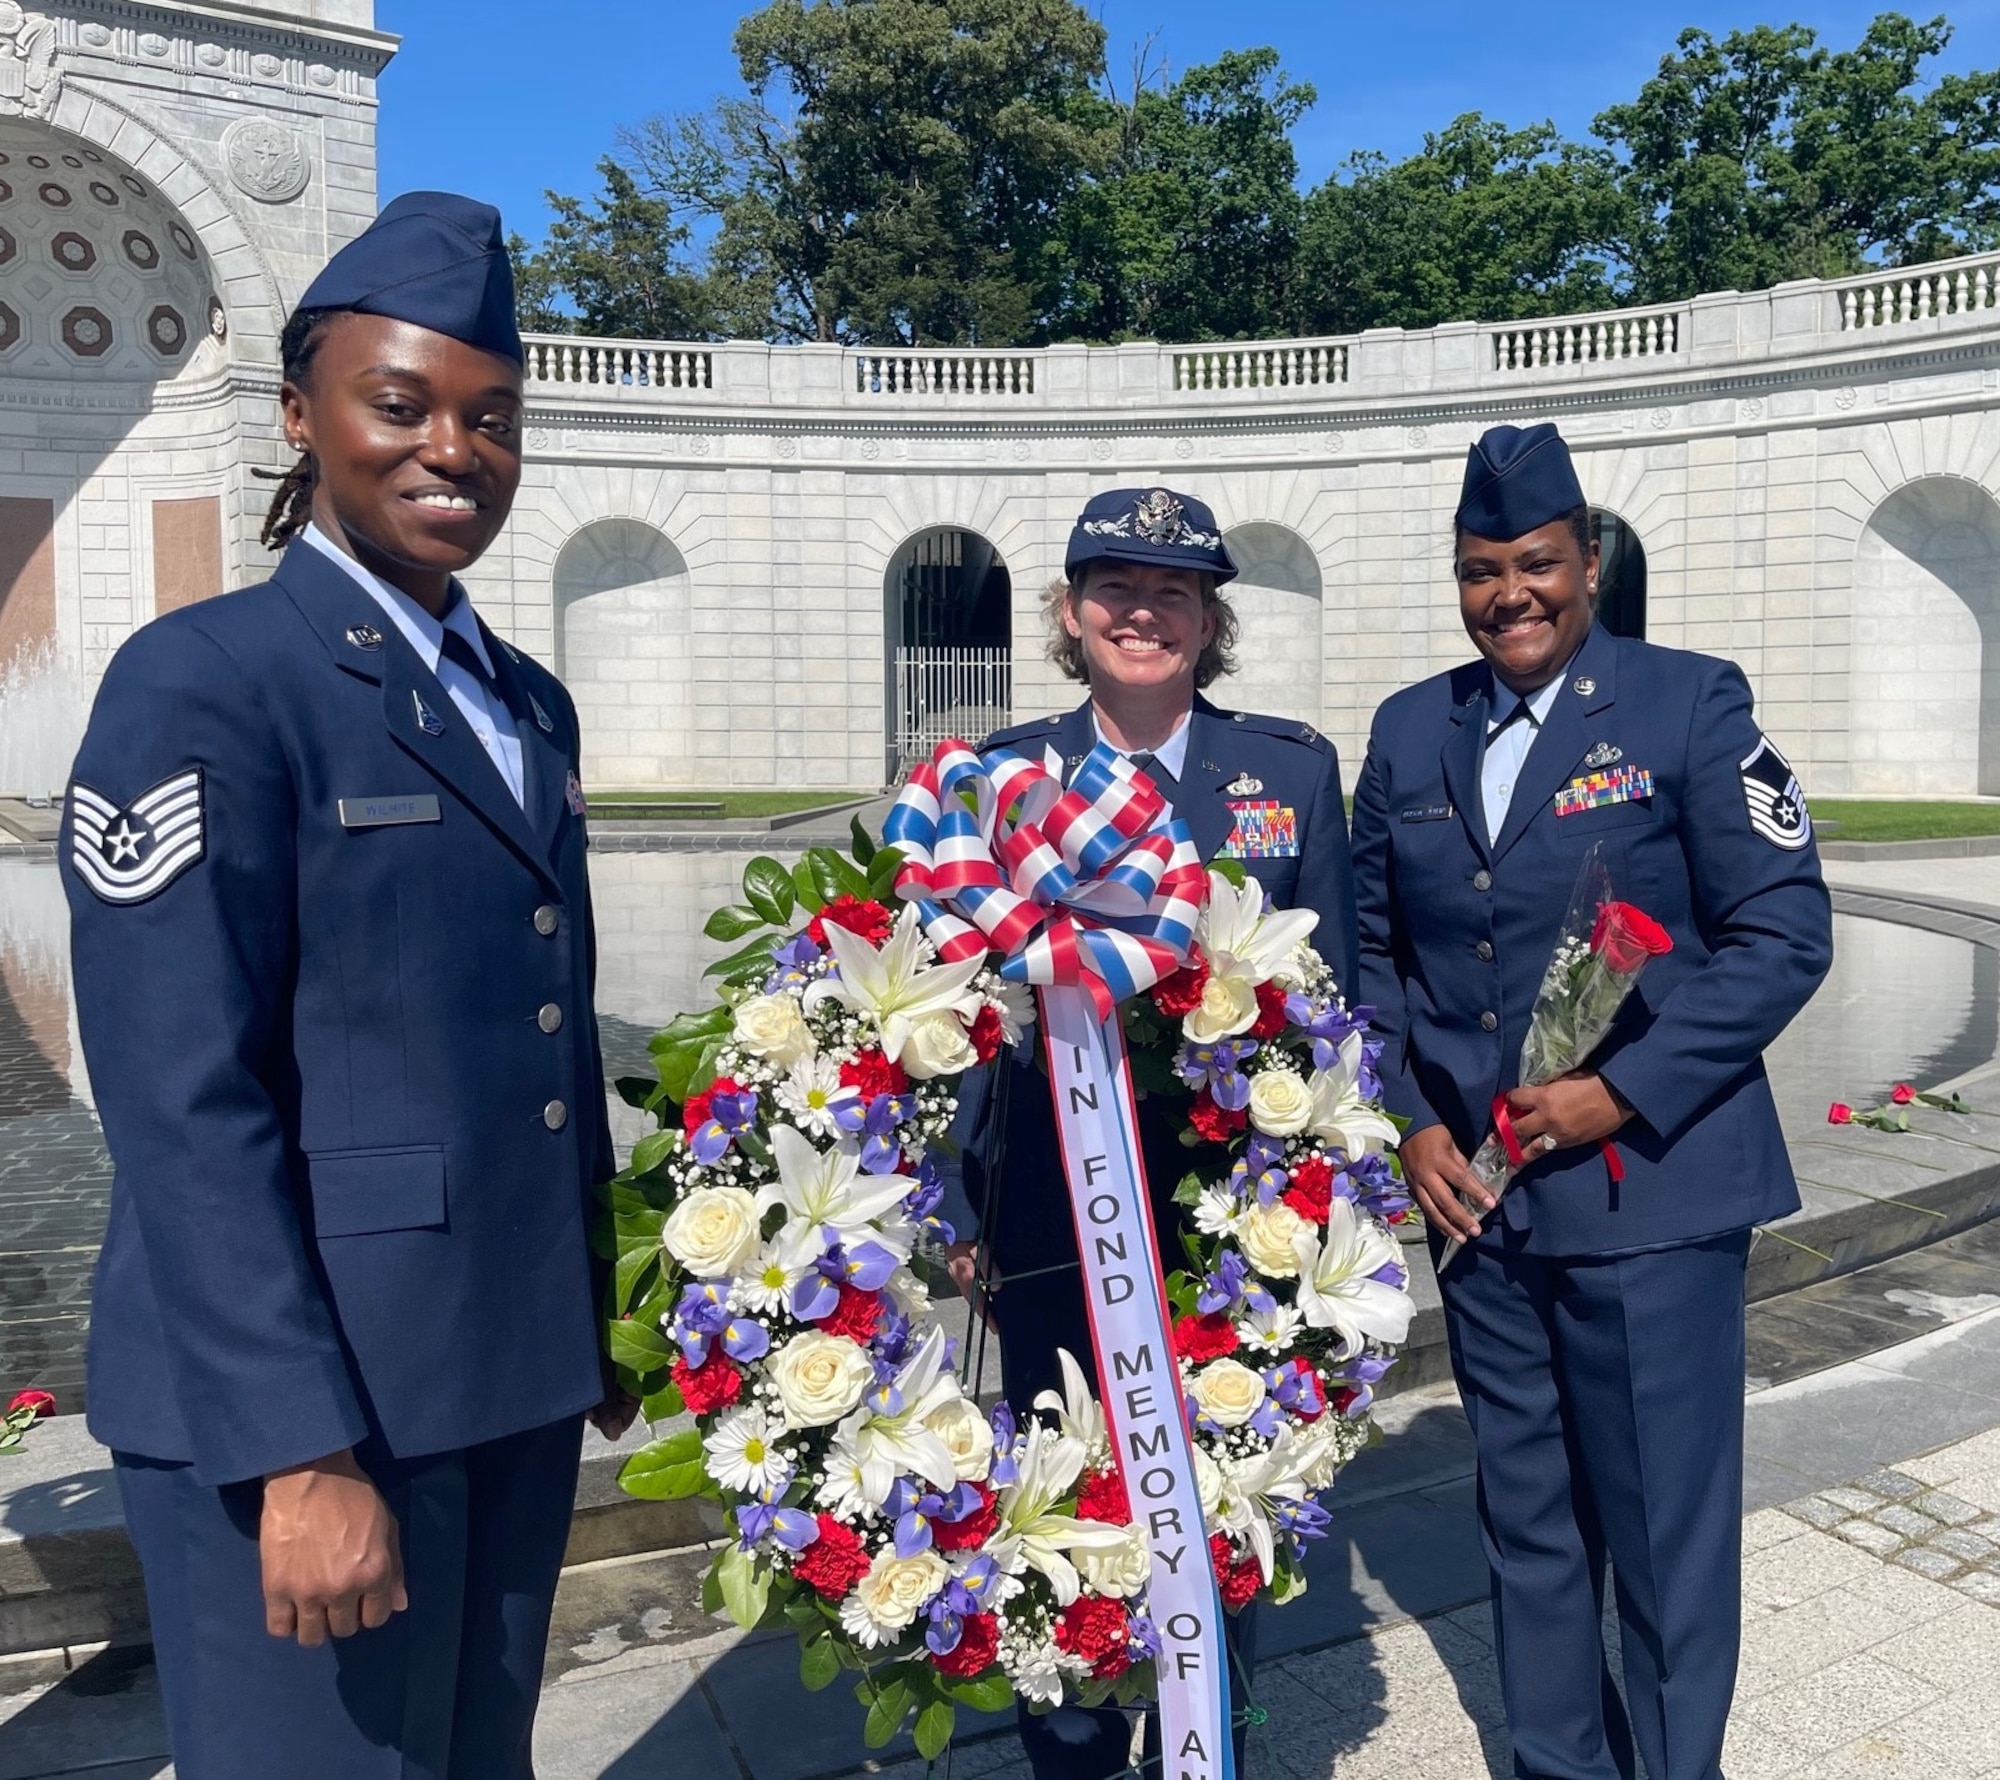 WKU hosts annual Veterans Day wreath ceremony – Talisman